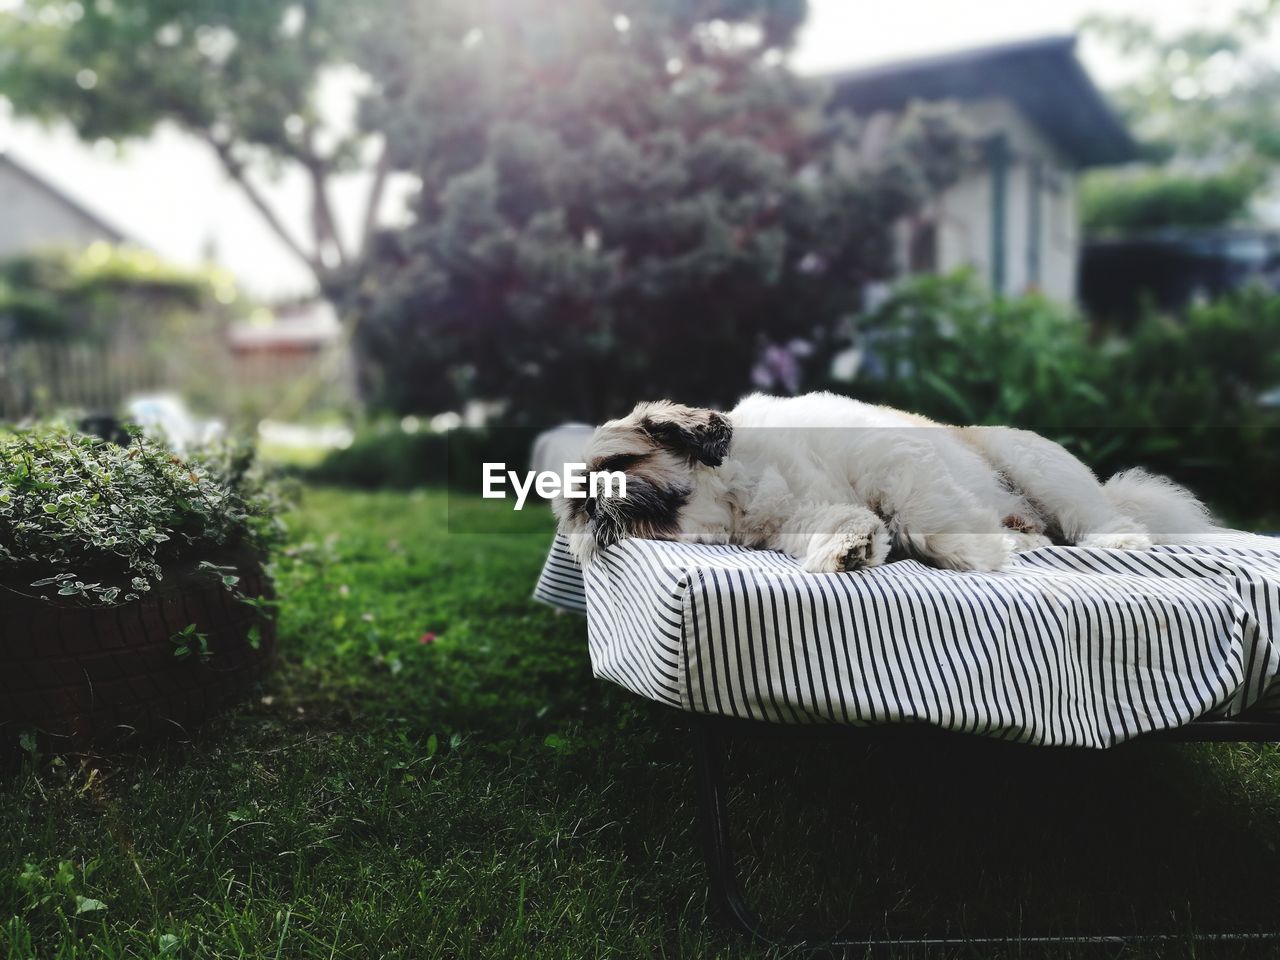 DOG SLEEPING ON GRASS IN BACKYARD